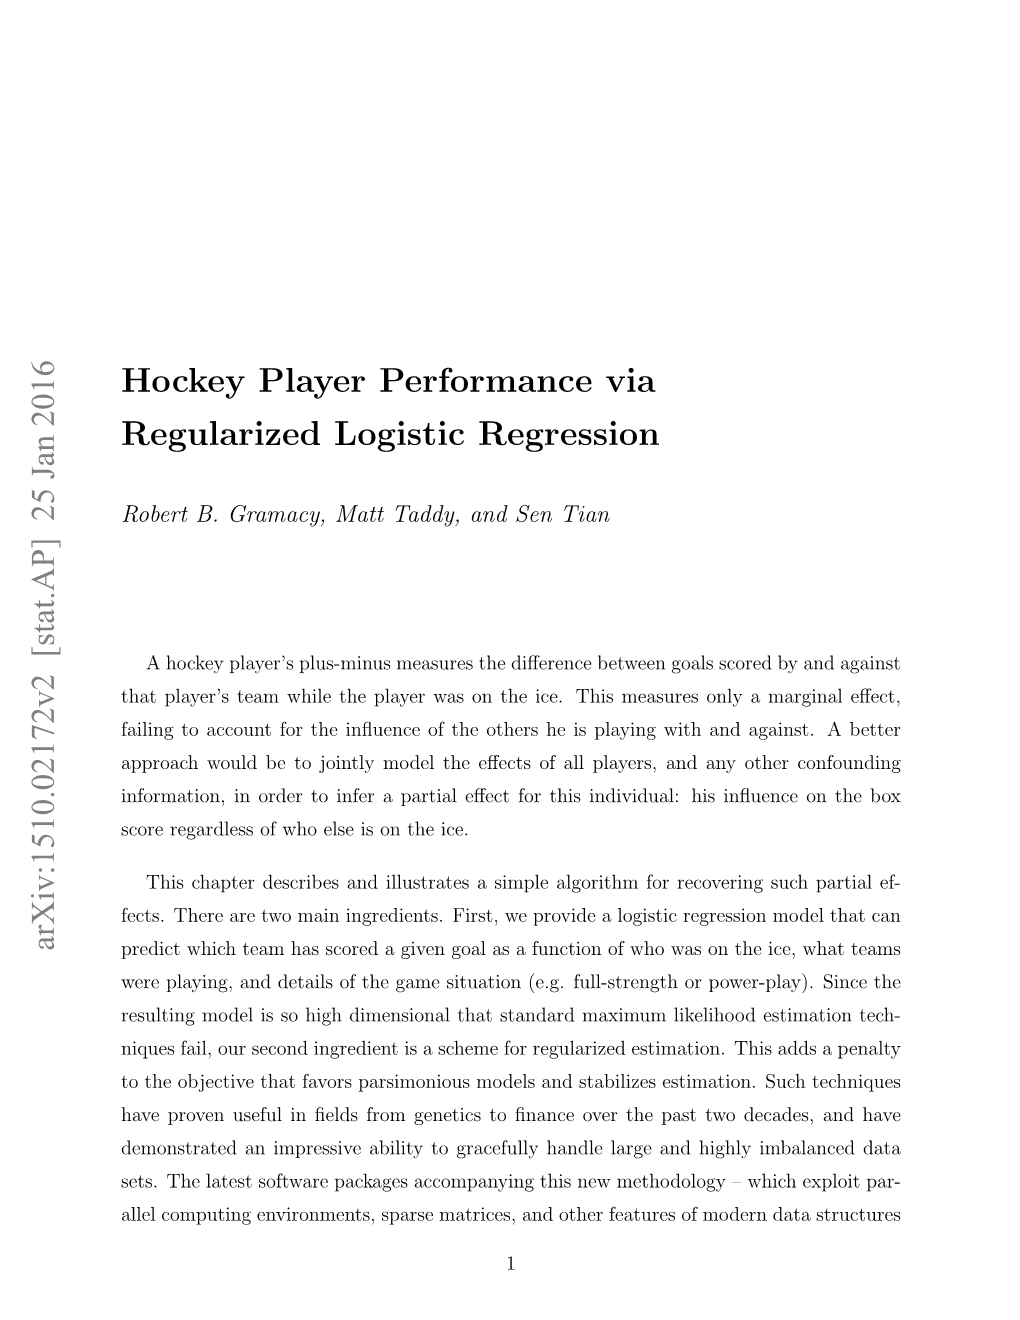 Hockey Player Performance Via Regularized Logistic Regression